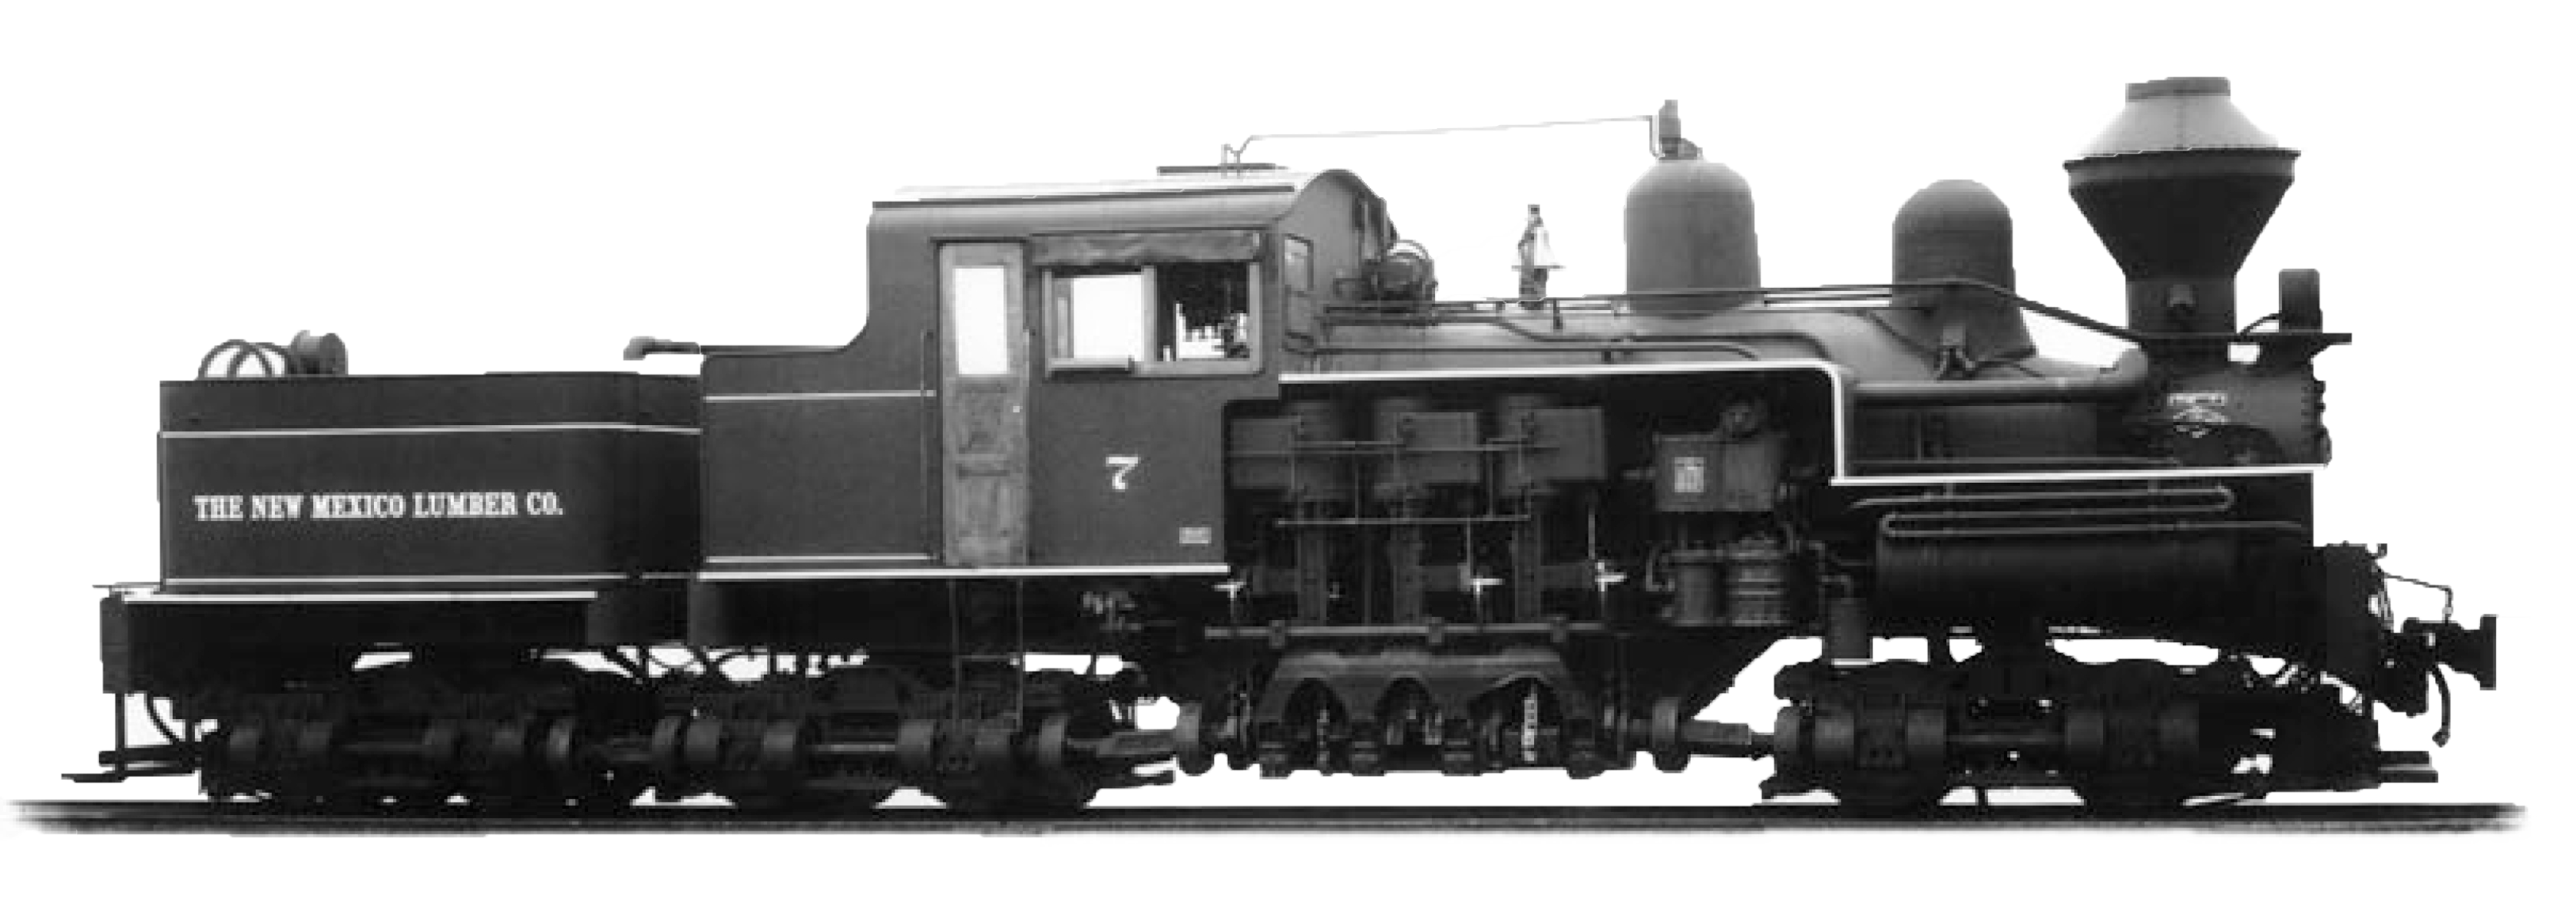 Train PNG Image Transparent